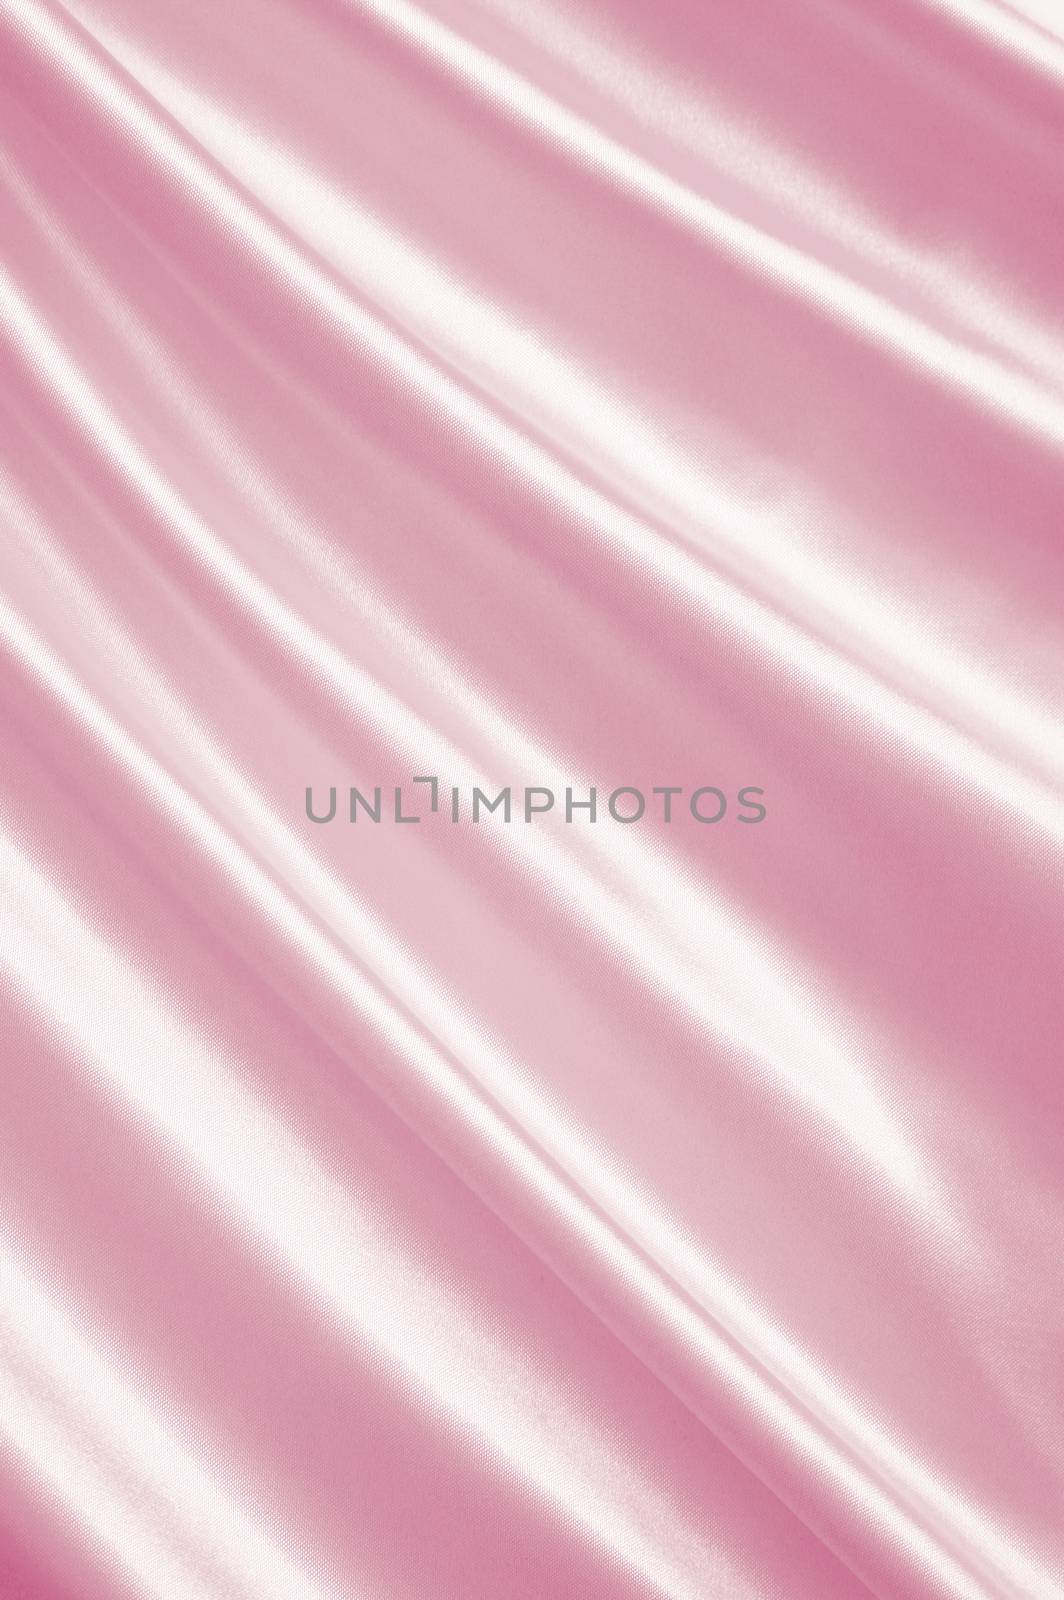 Smooth elegant pink silk or satin as wedding background by oxanatravel